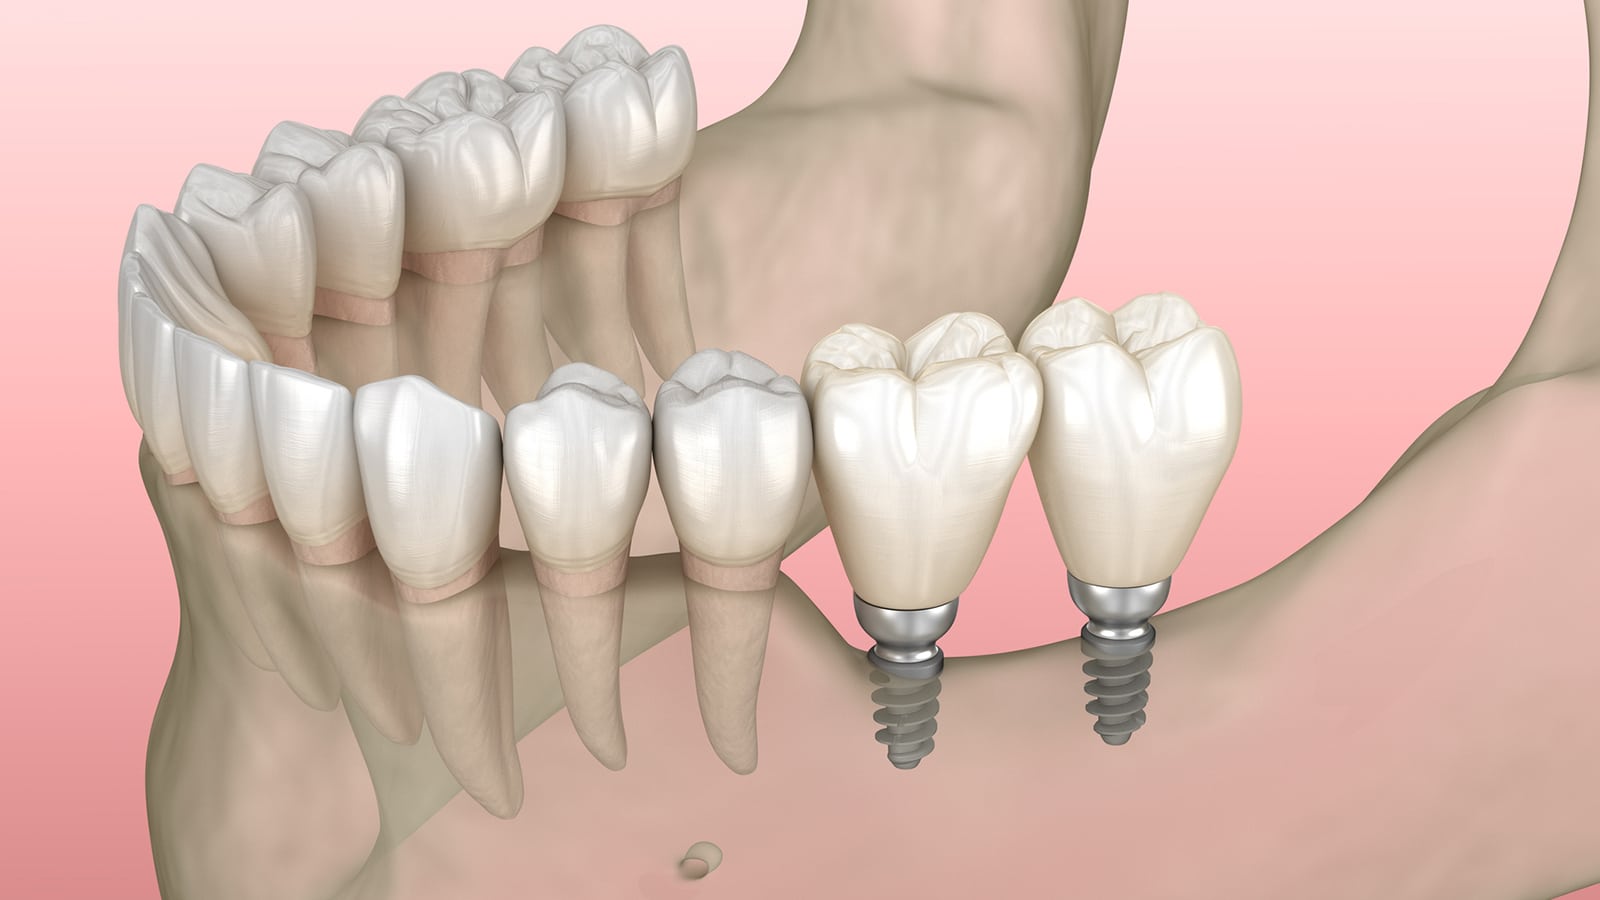 Mini Dental Implants (MDIs)